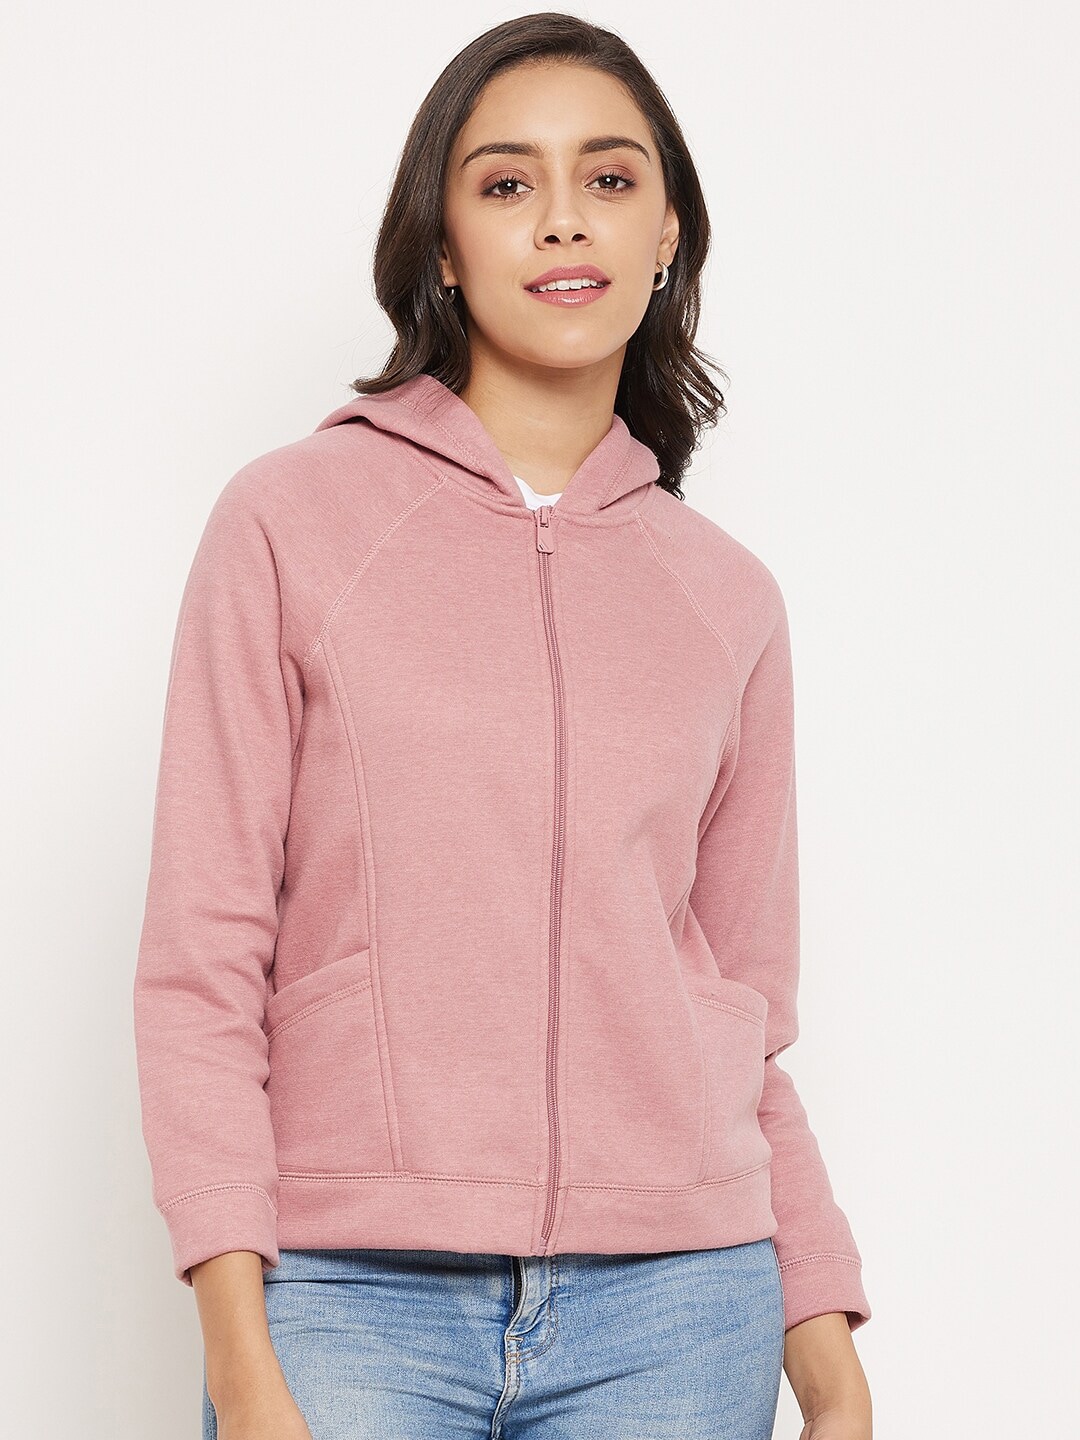 Madame Women Pink Sweatshirt Price in India